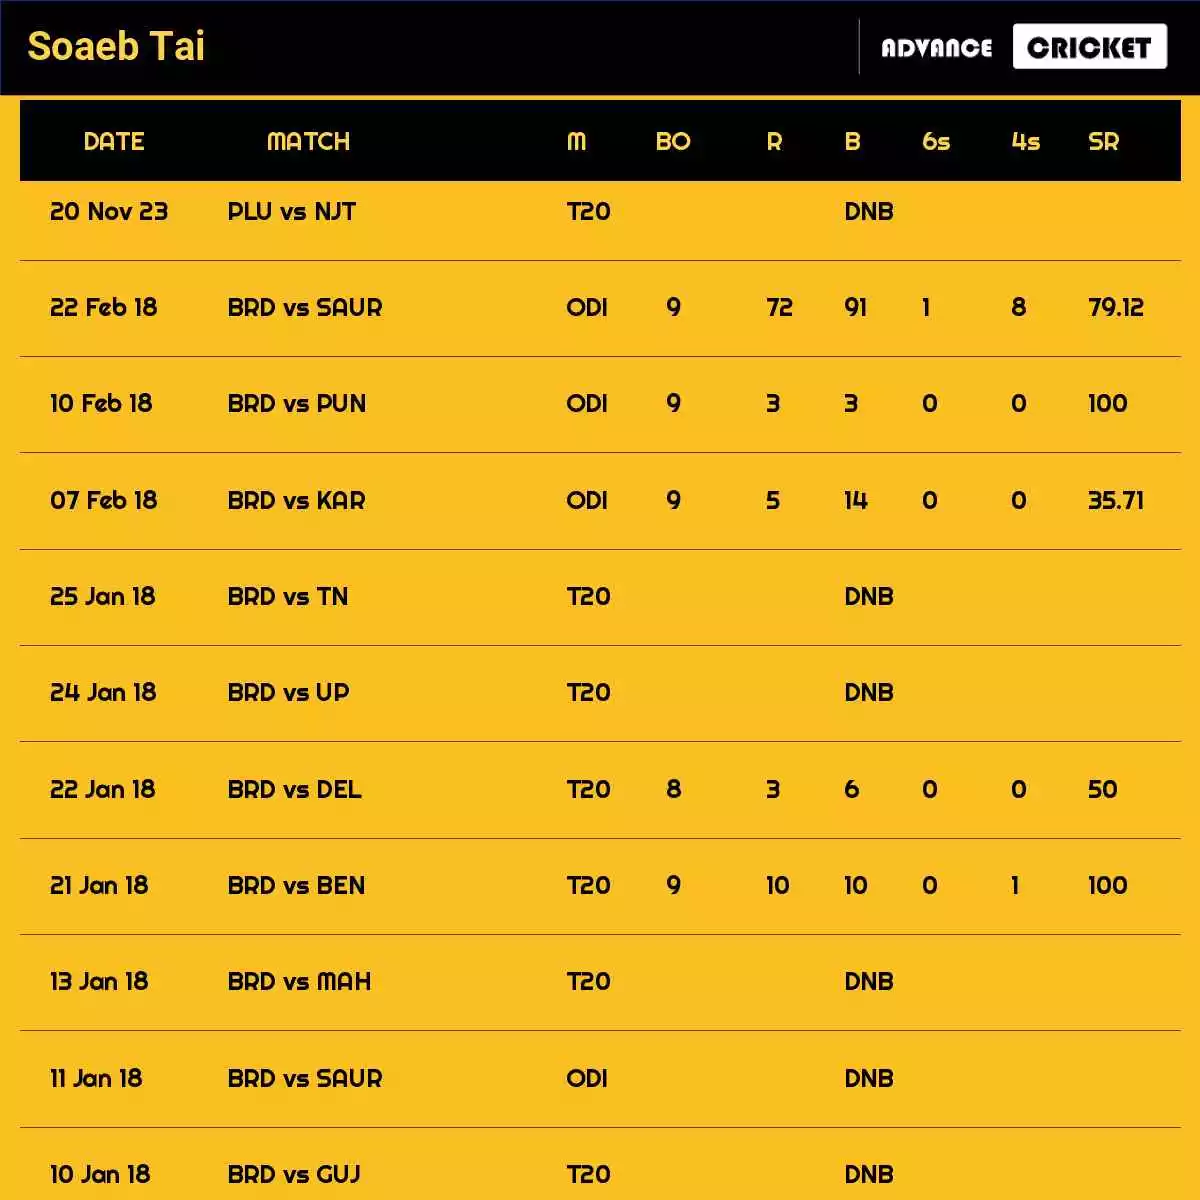 Soaeb Tai Recent Matches Details Date Wise